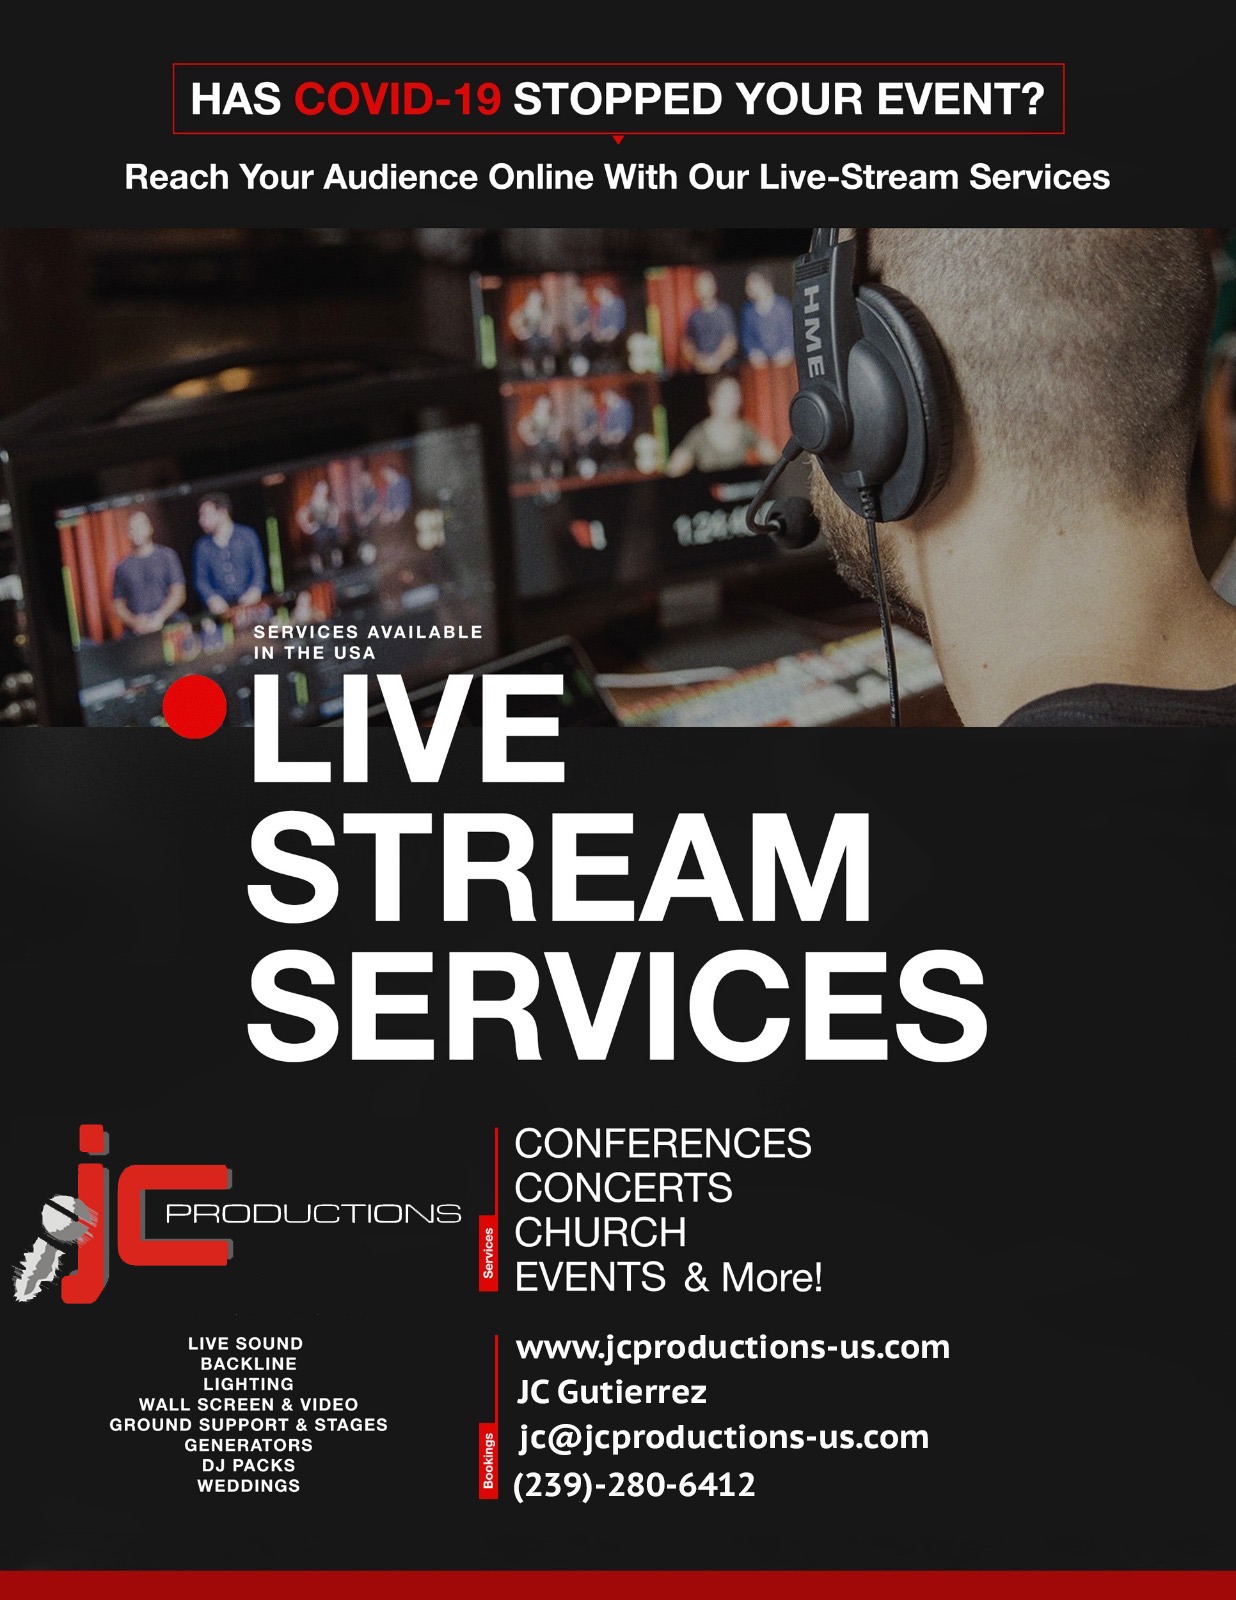 Professional Live Streamingu003e jcproductions-us